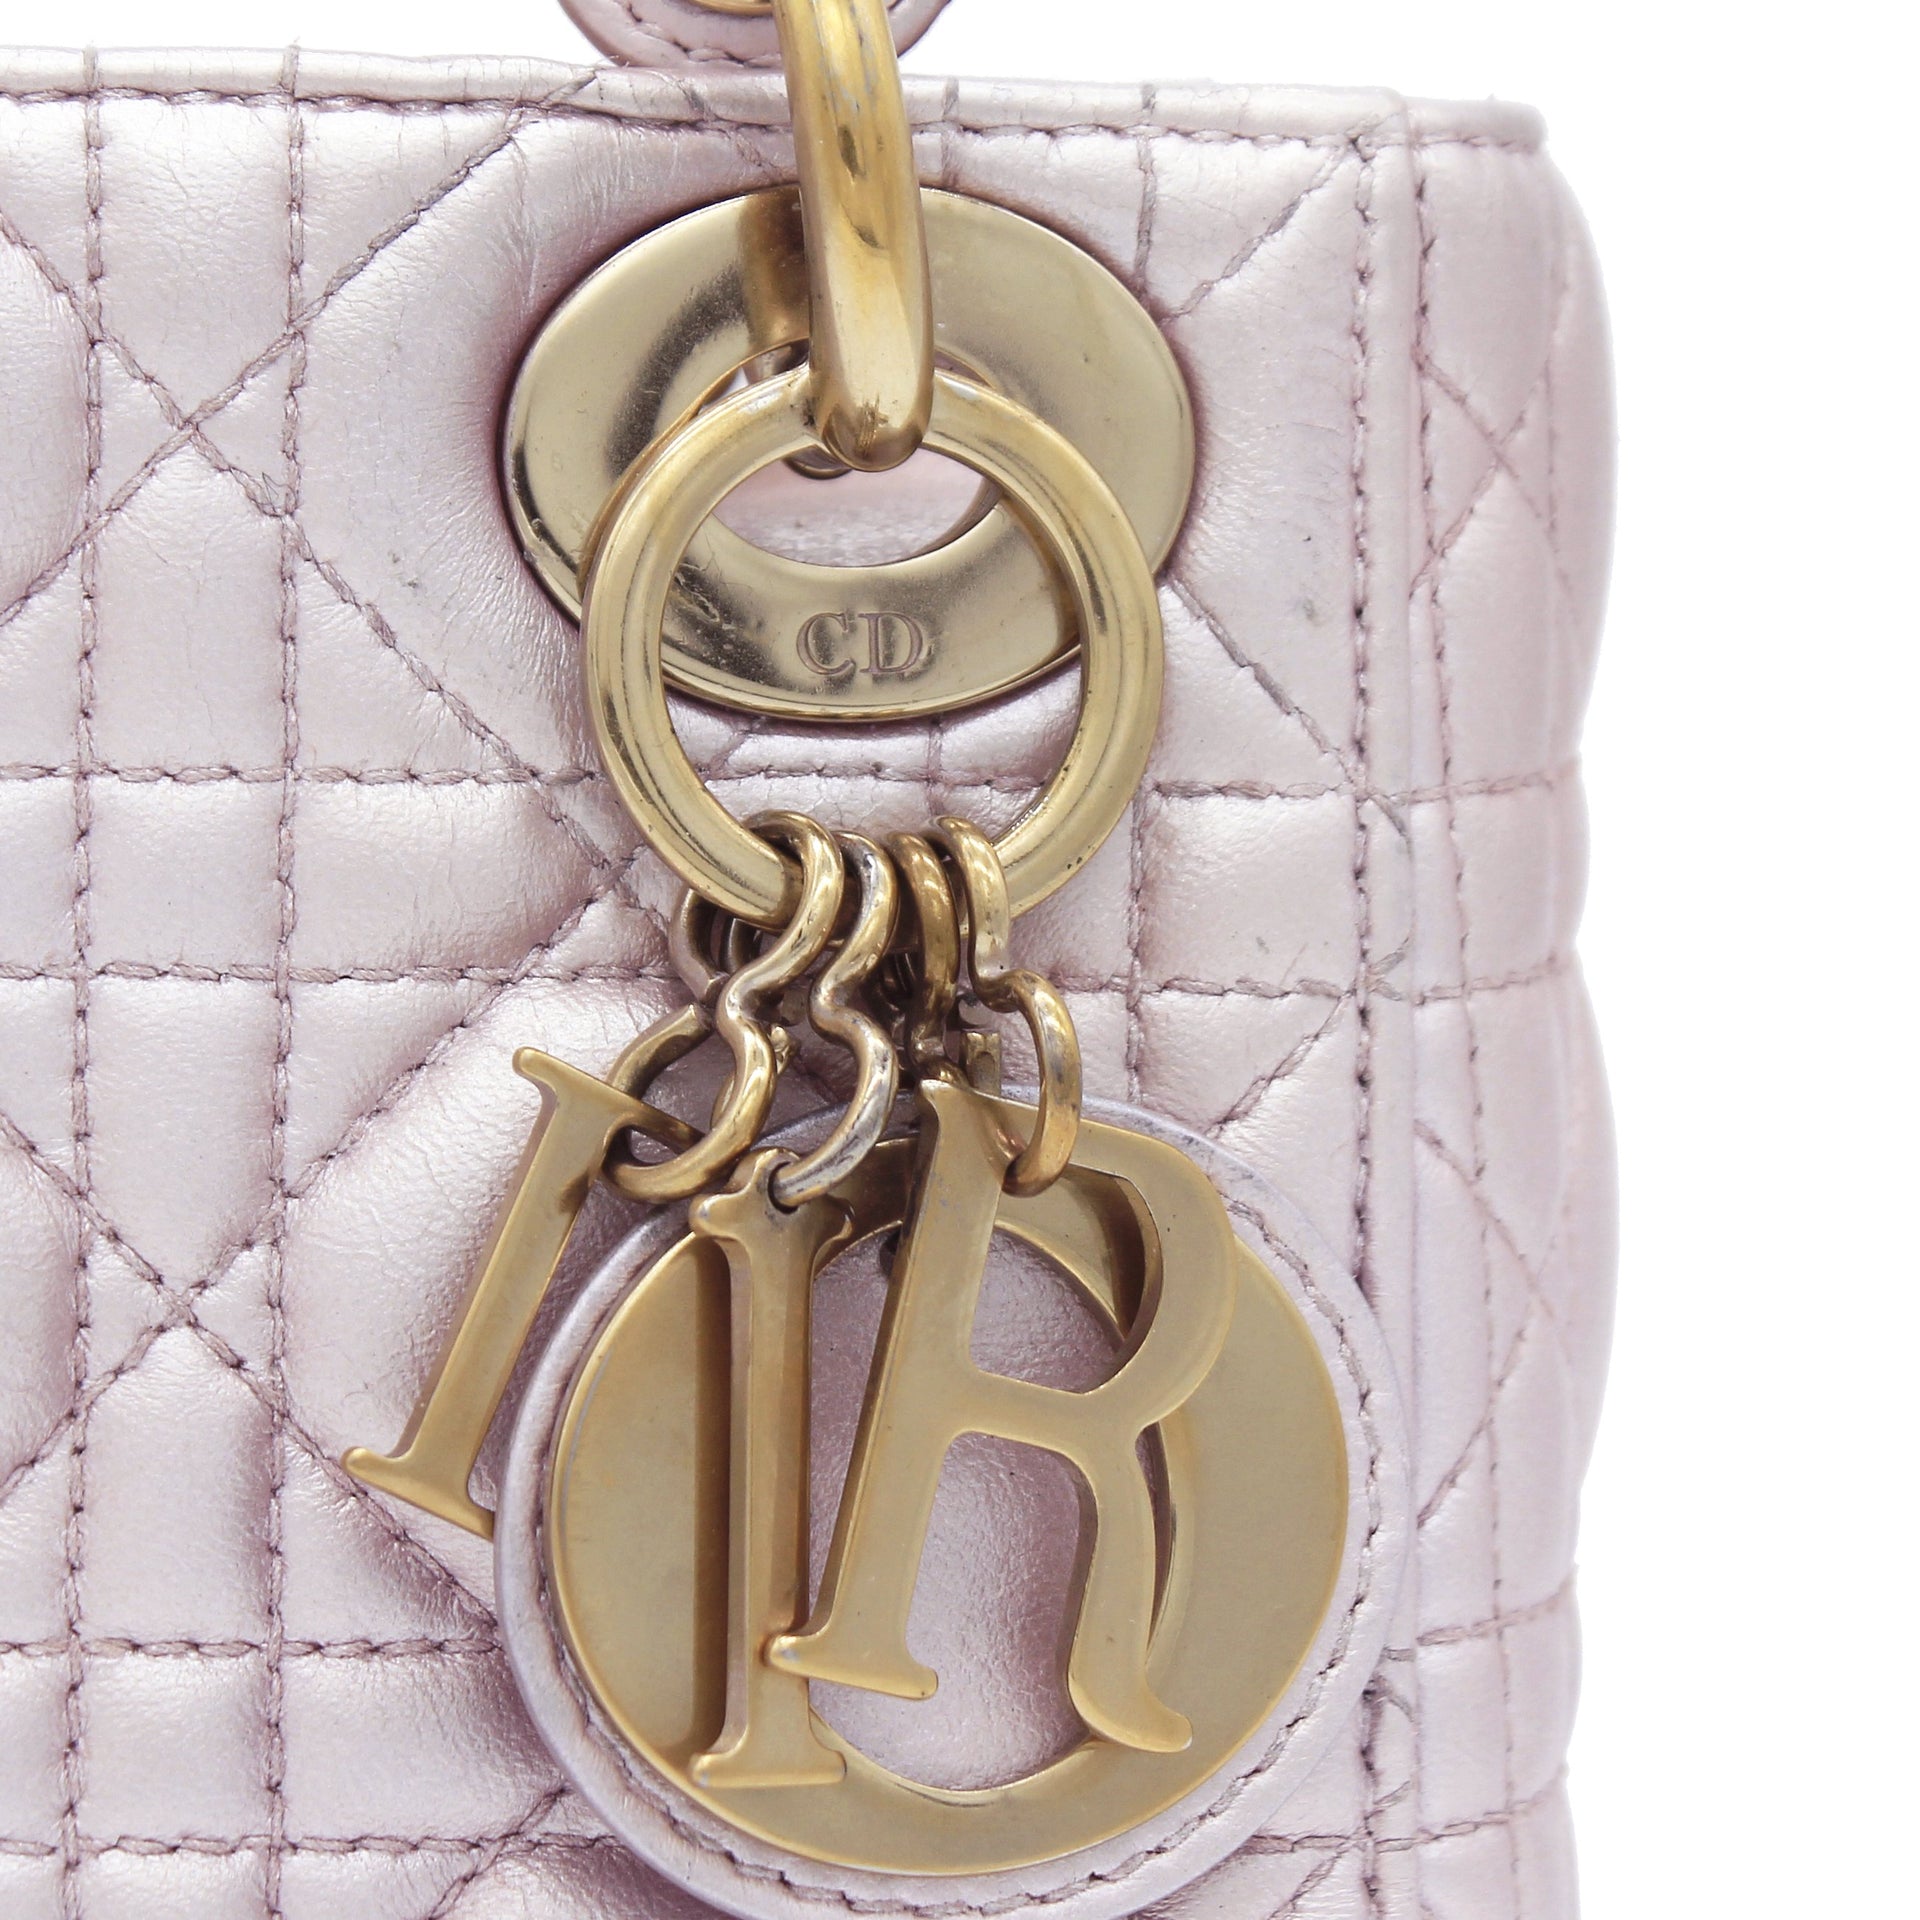 Christian Dior Mini Lady Dior Bag Cannage Lambskin Iridescent Pink